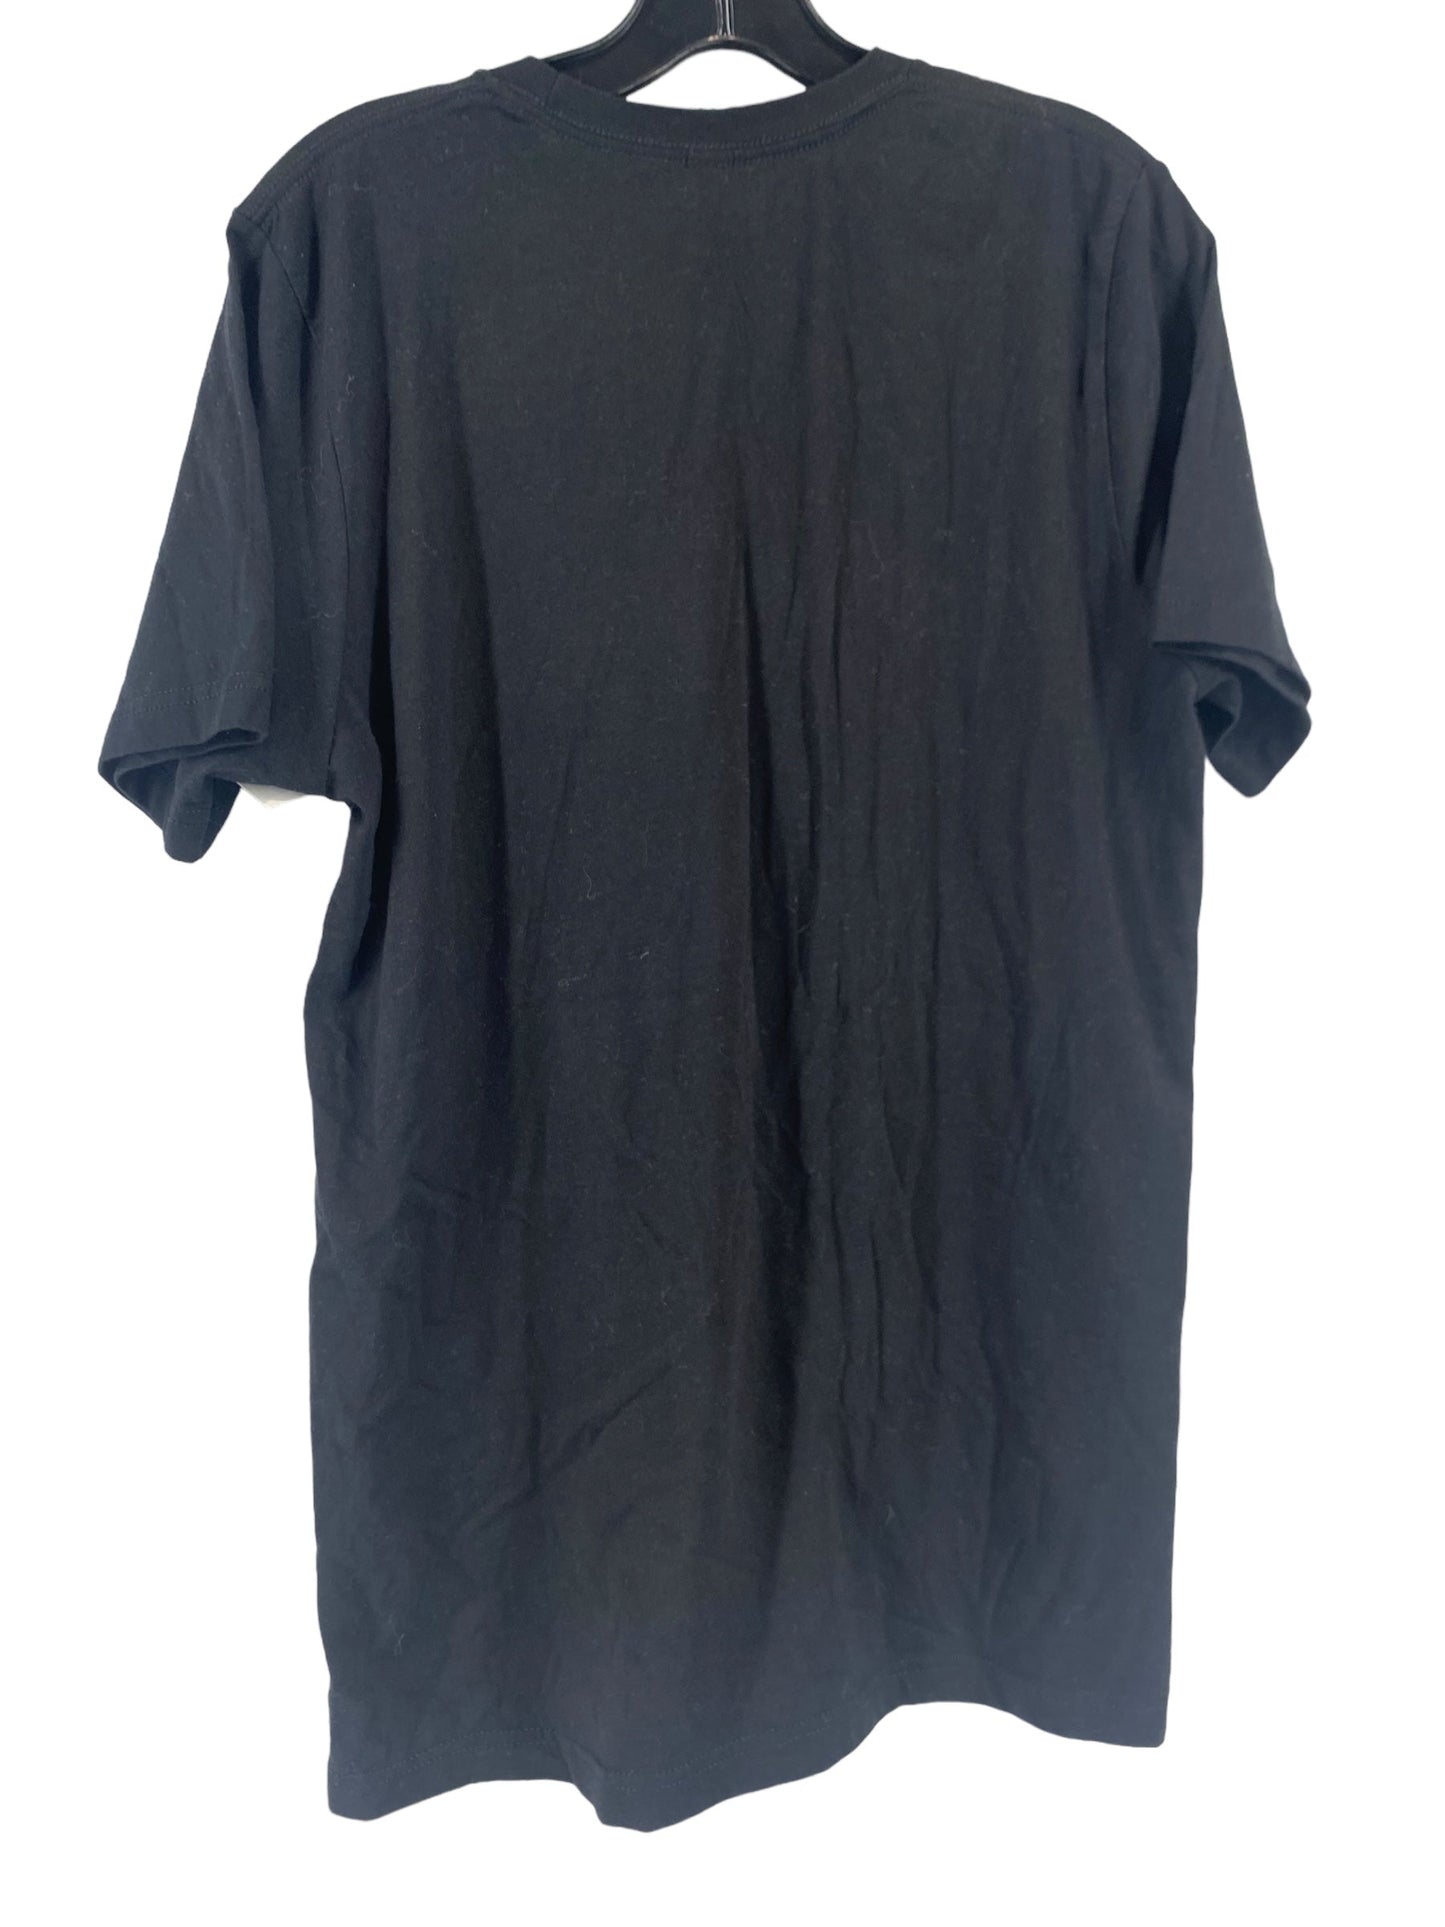 Black Top Short Sleeve Basic Clothes Mentor, Size L